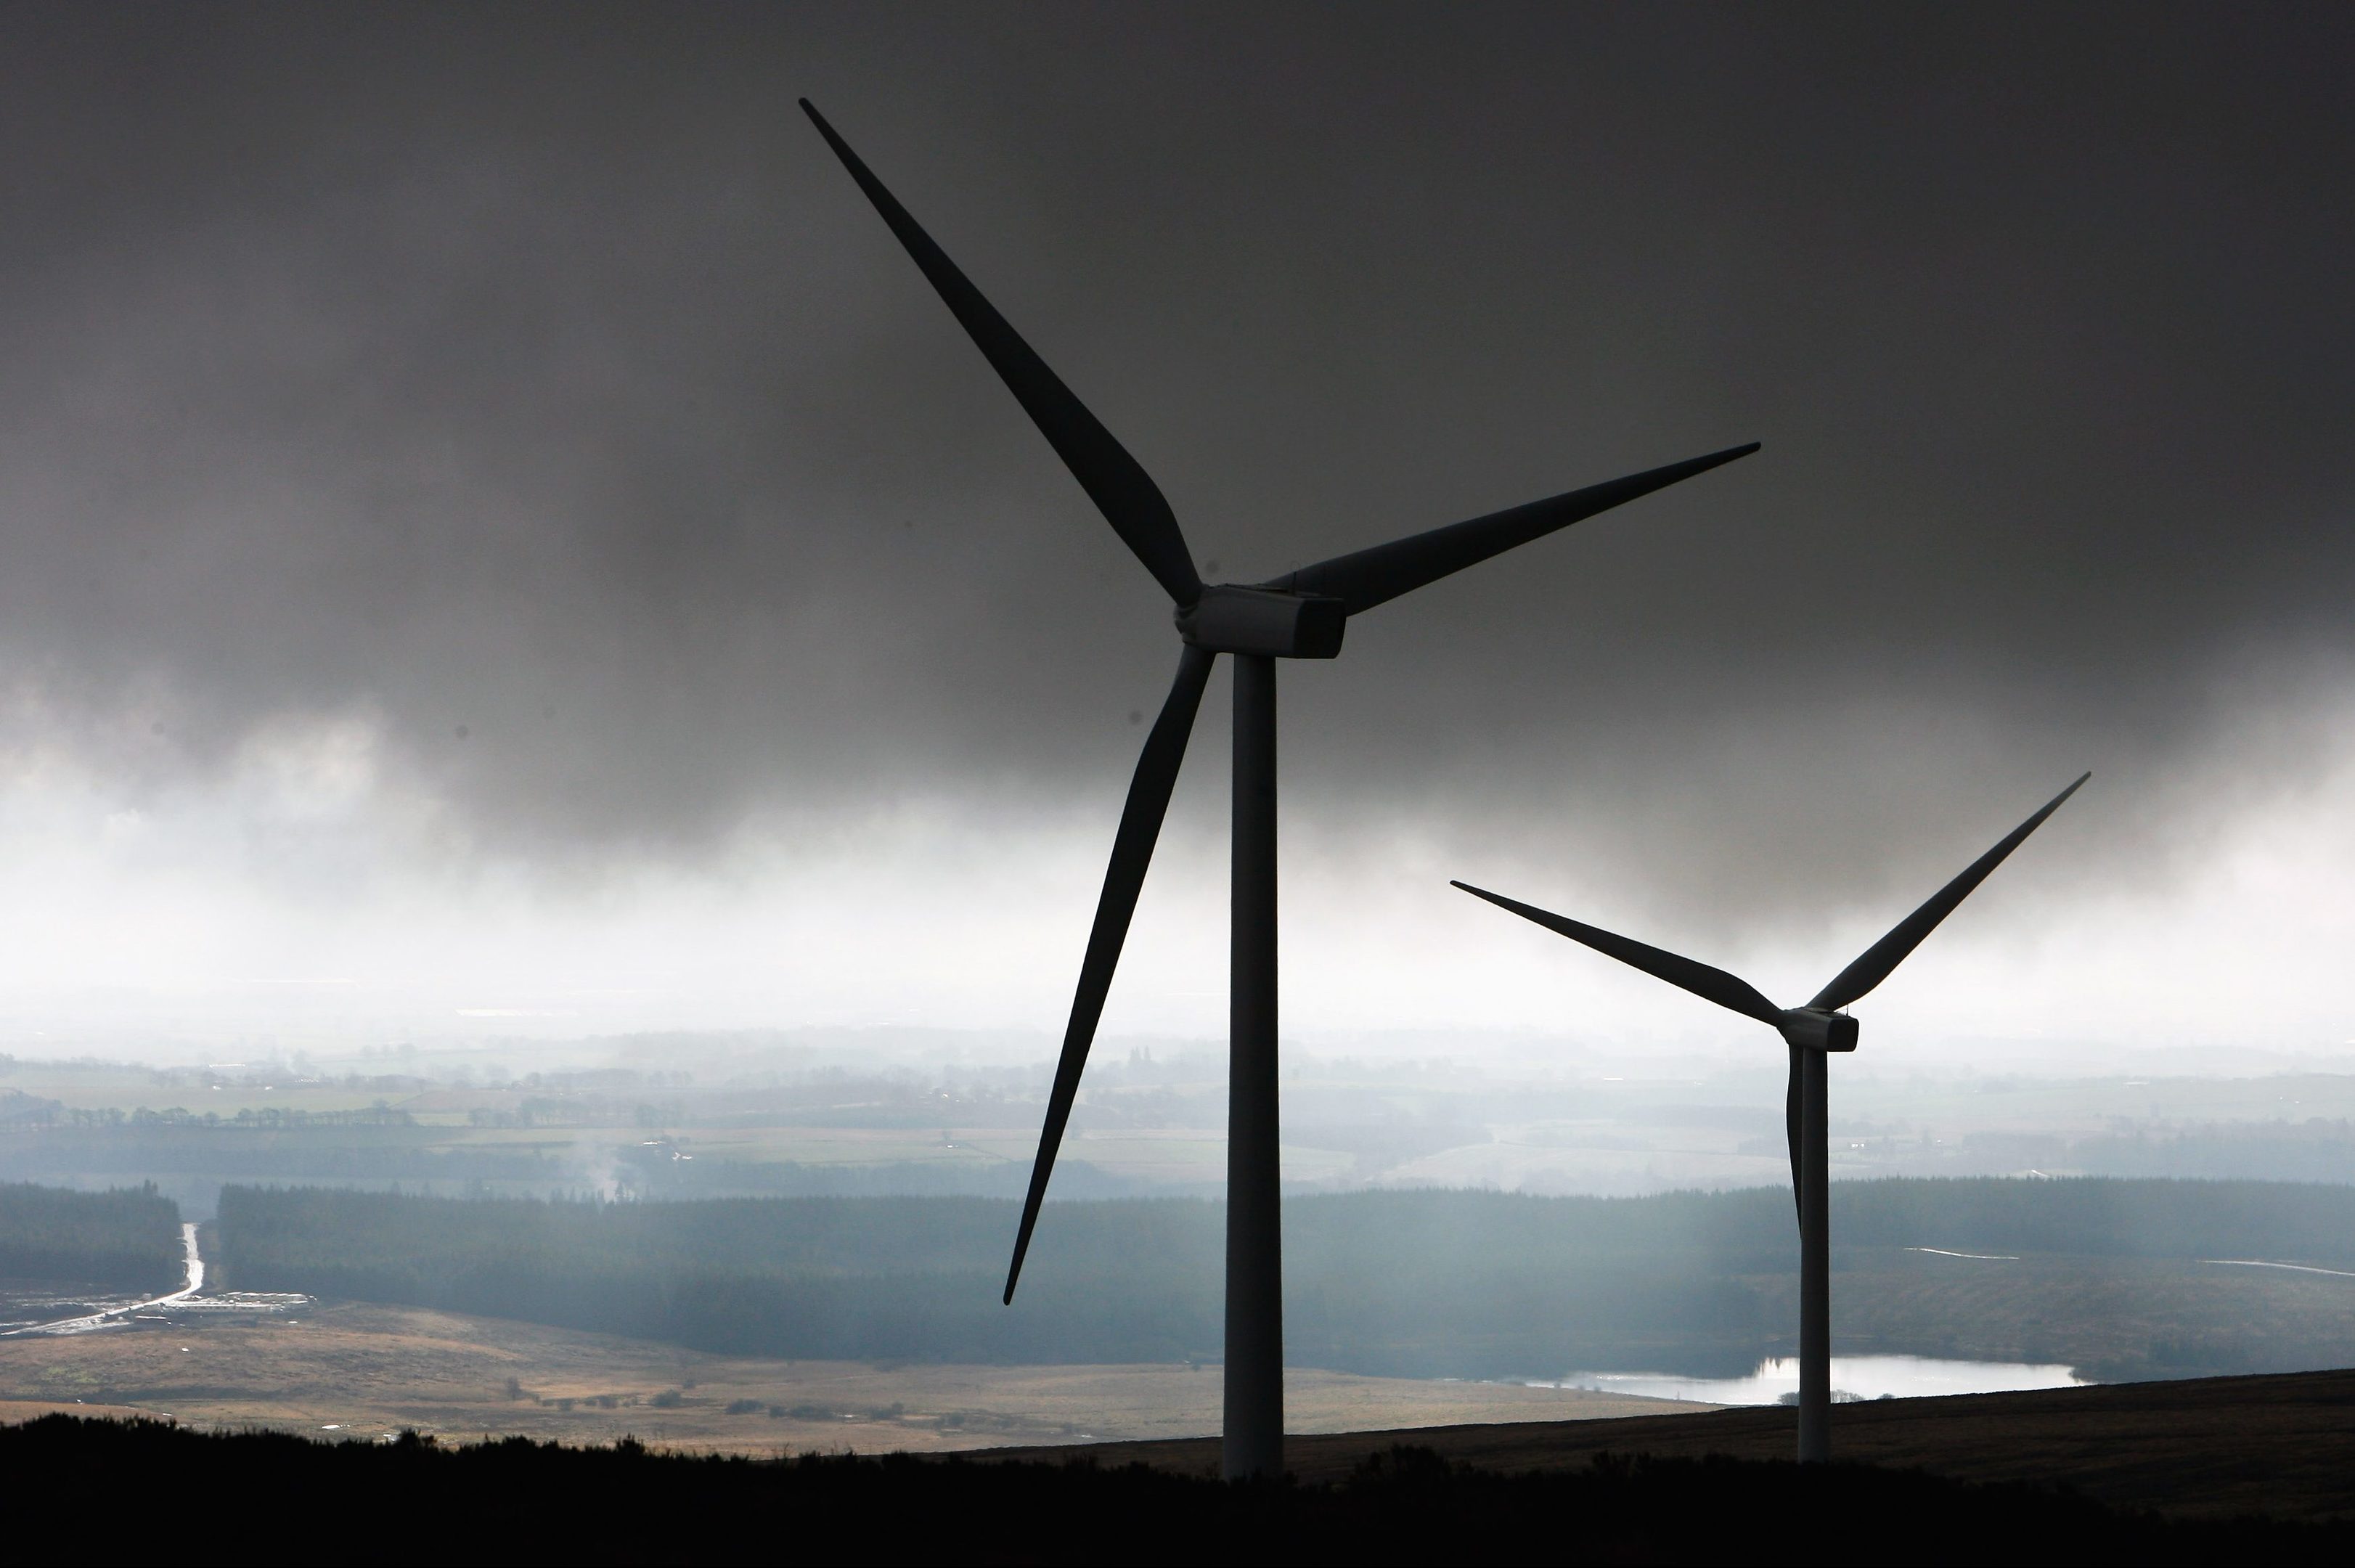 The Braes of Doune wind farm